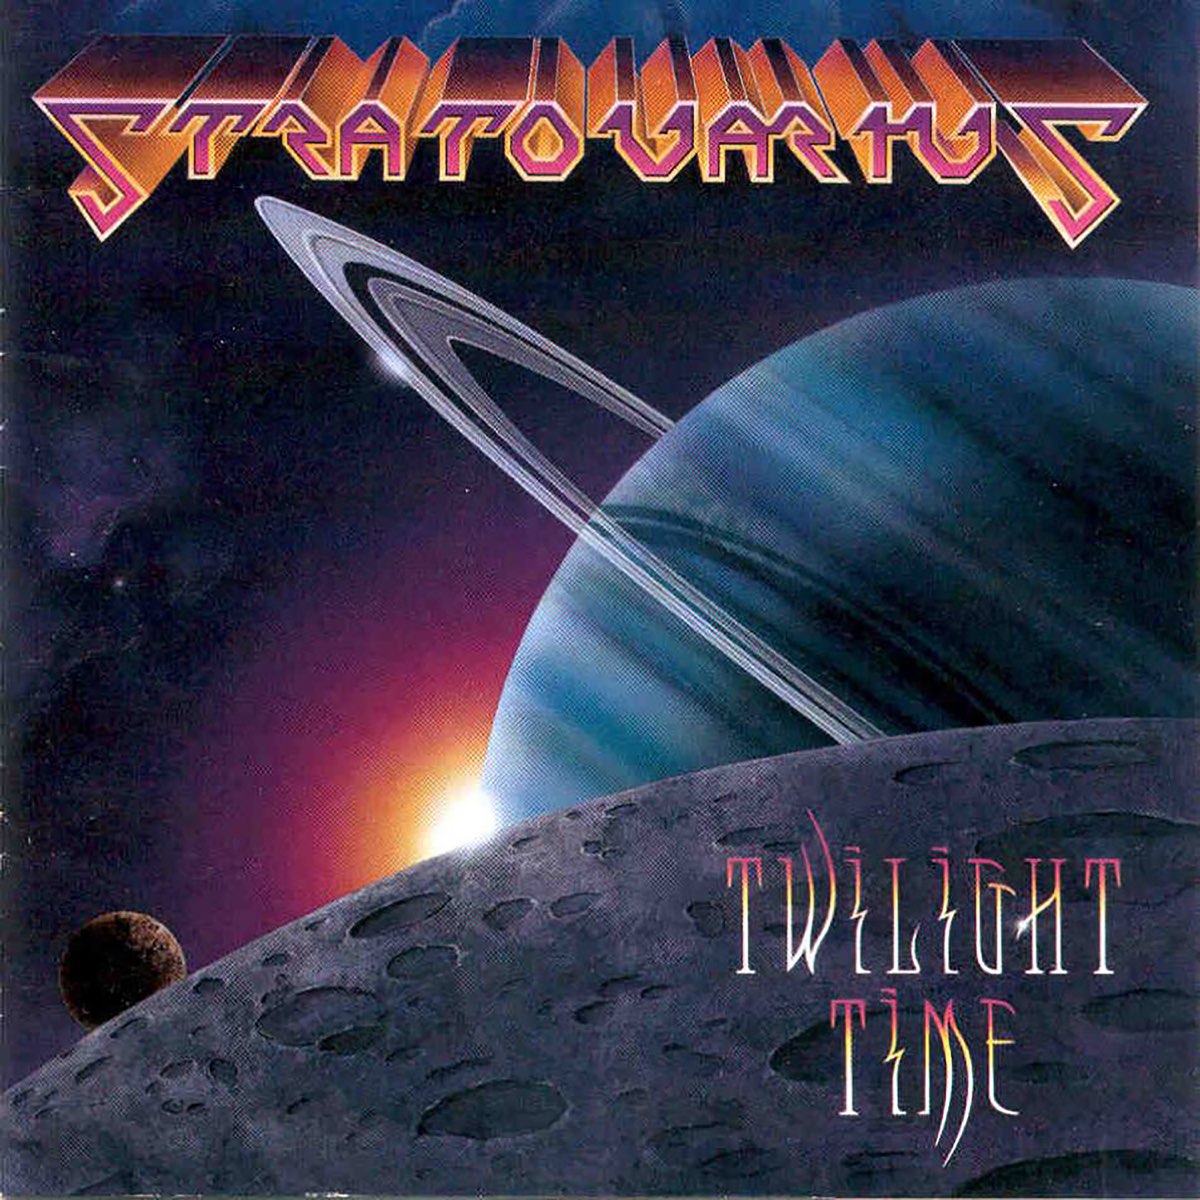 Twilight Time by Stratovarius on Apple Music